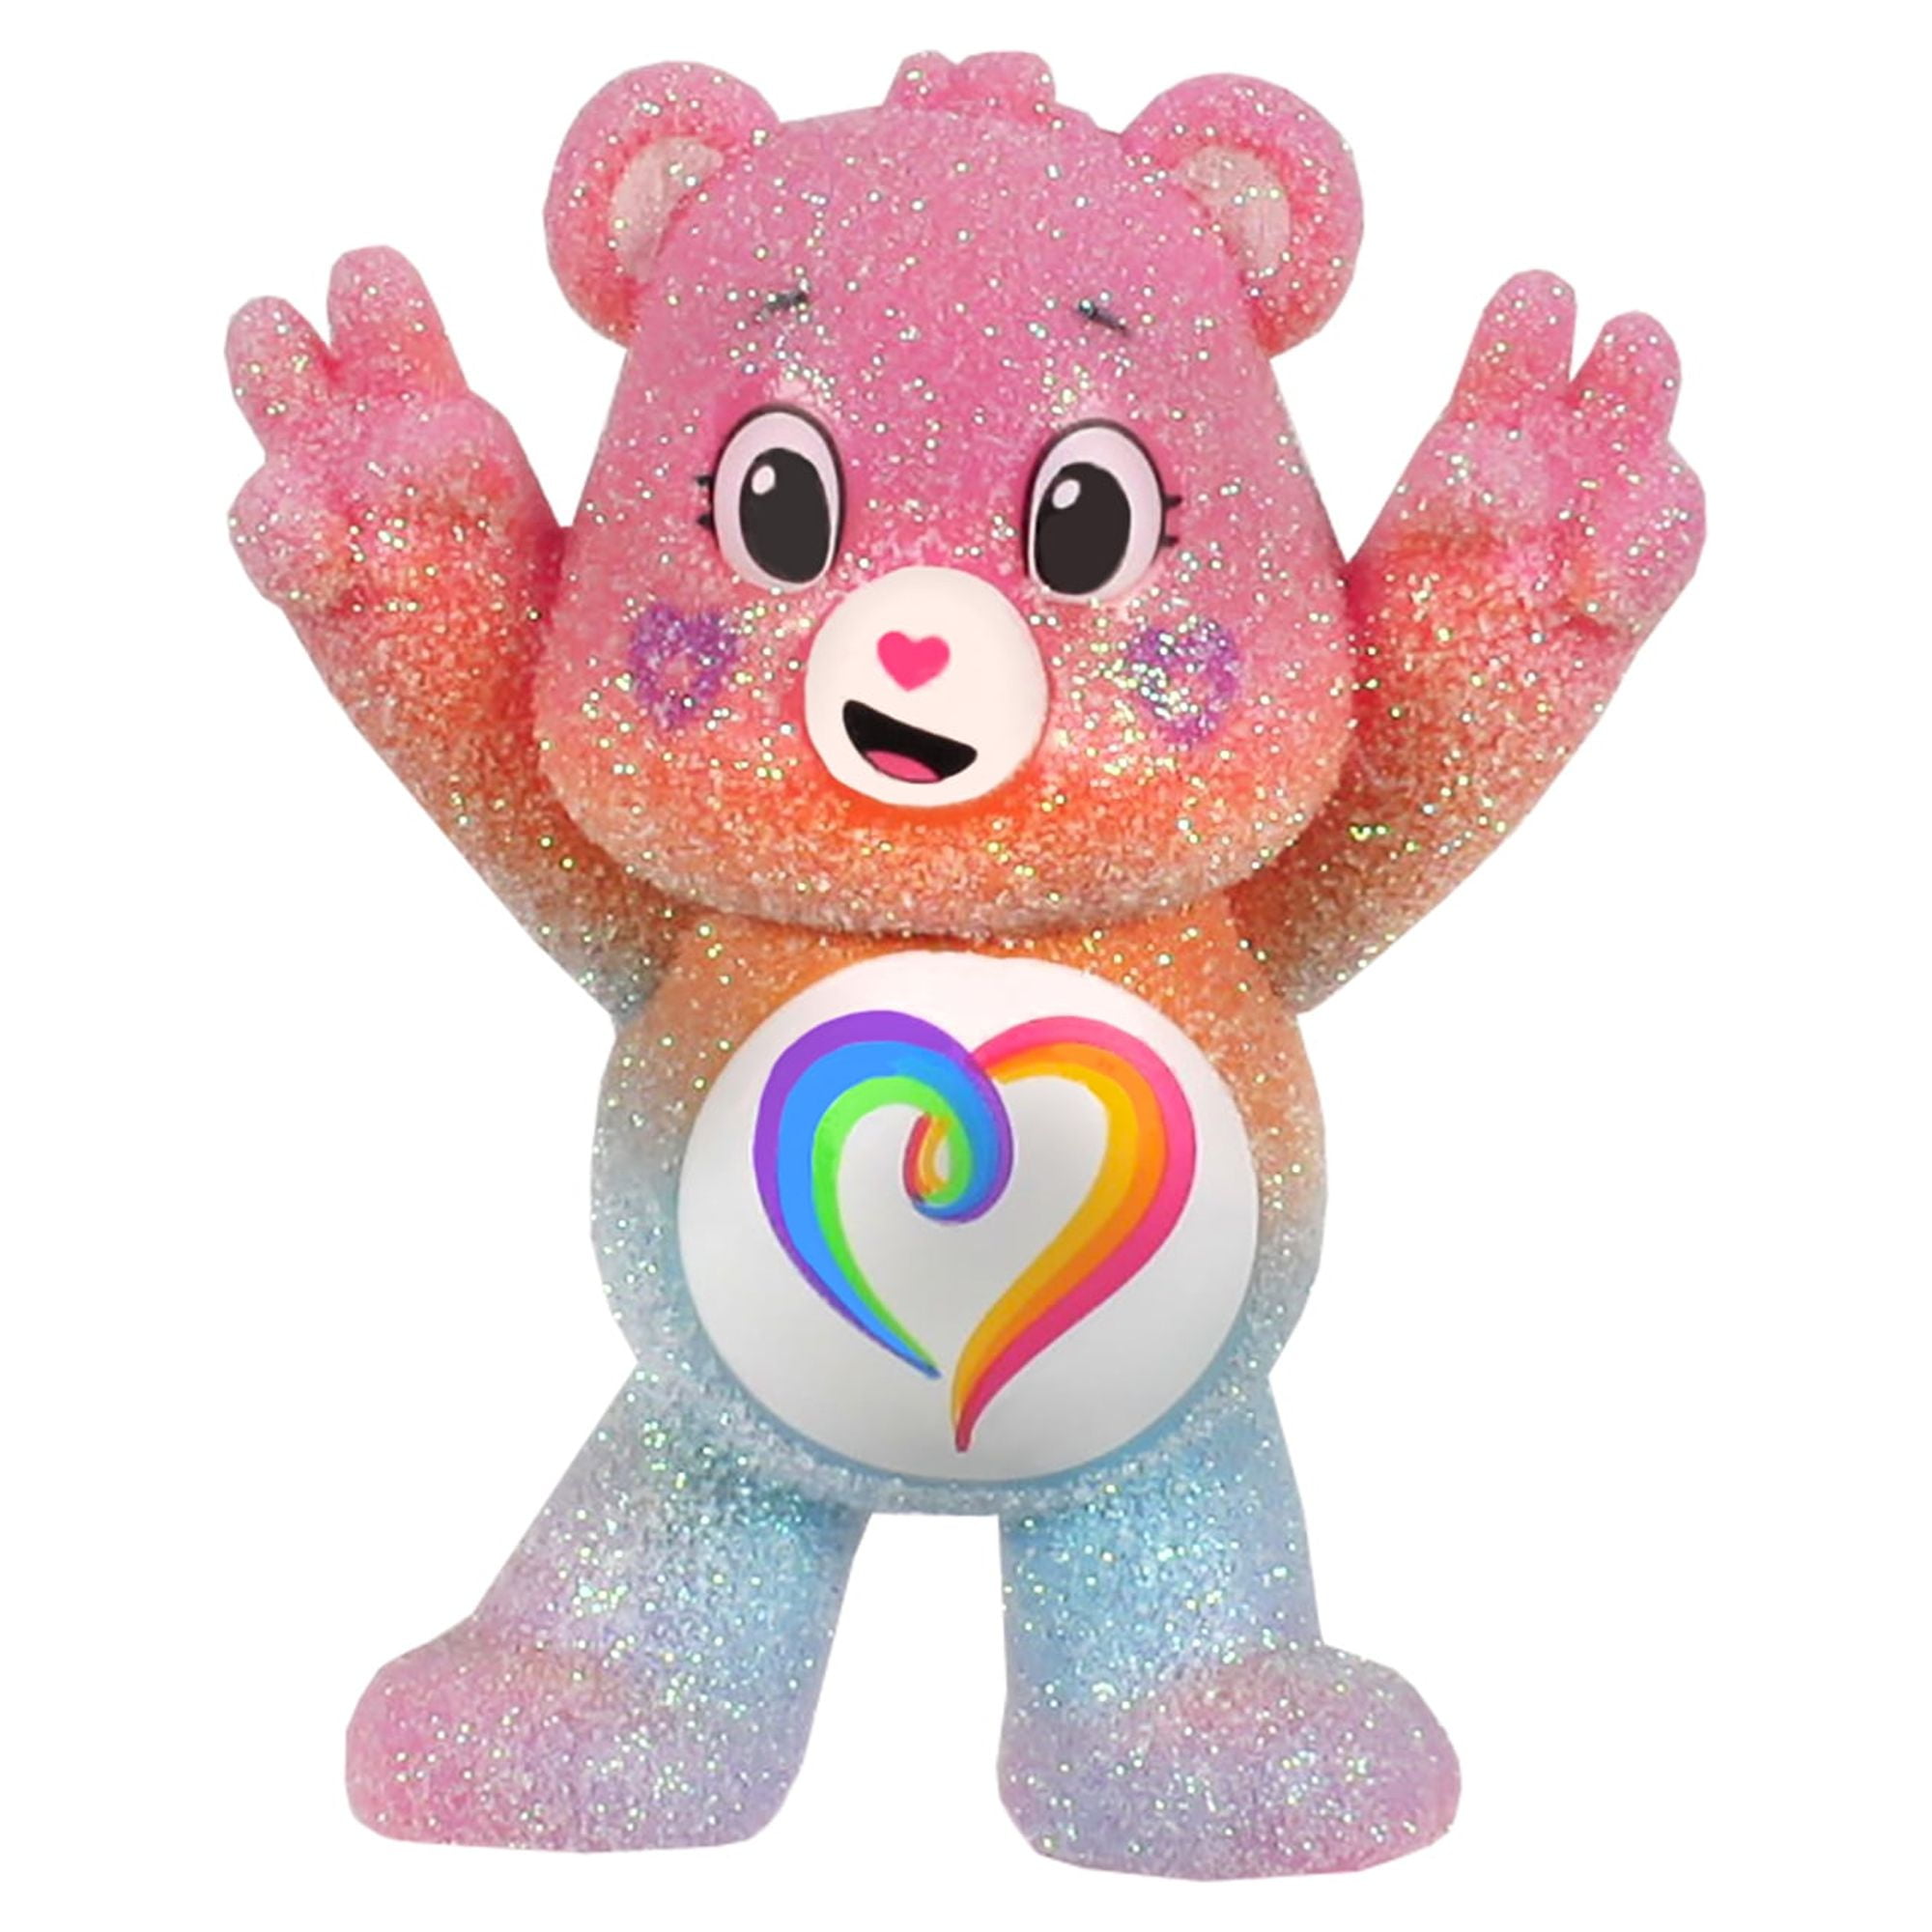 Care Bears™ 2ct Glitter Marker (unsented) – Kangaru Toys and Stationery